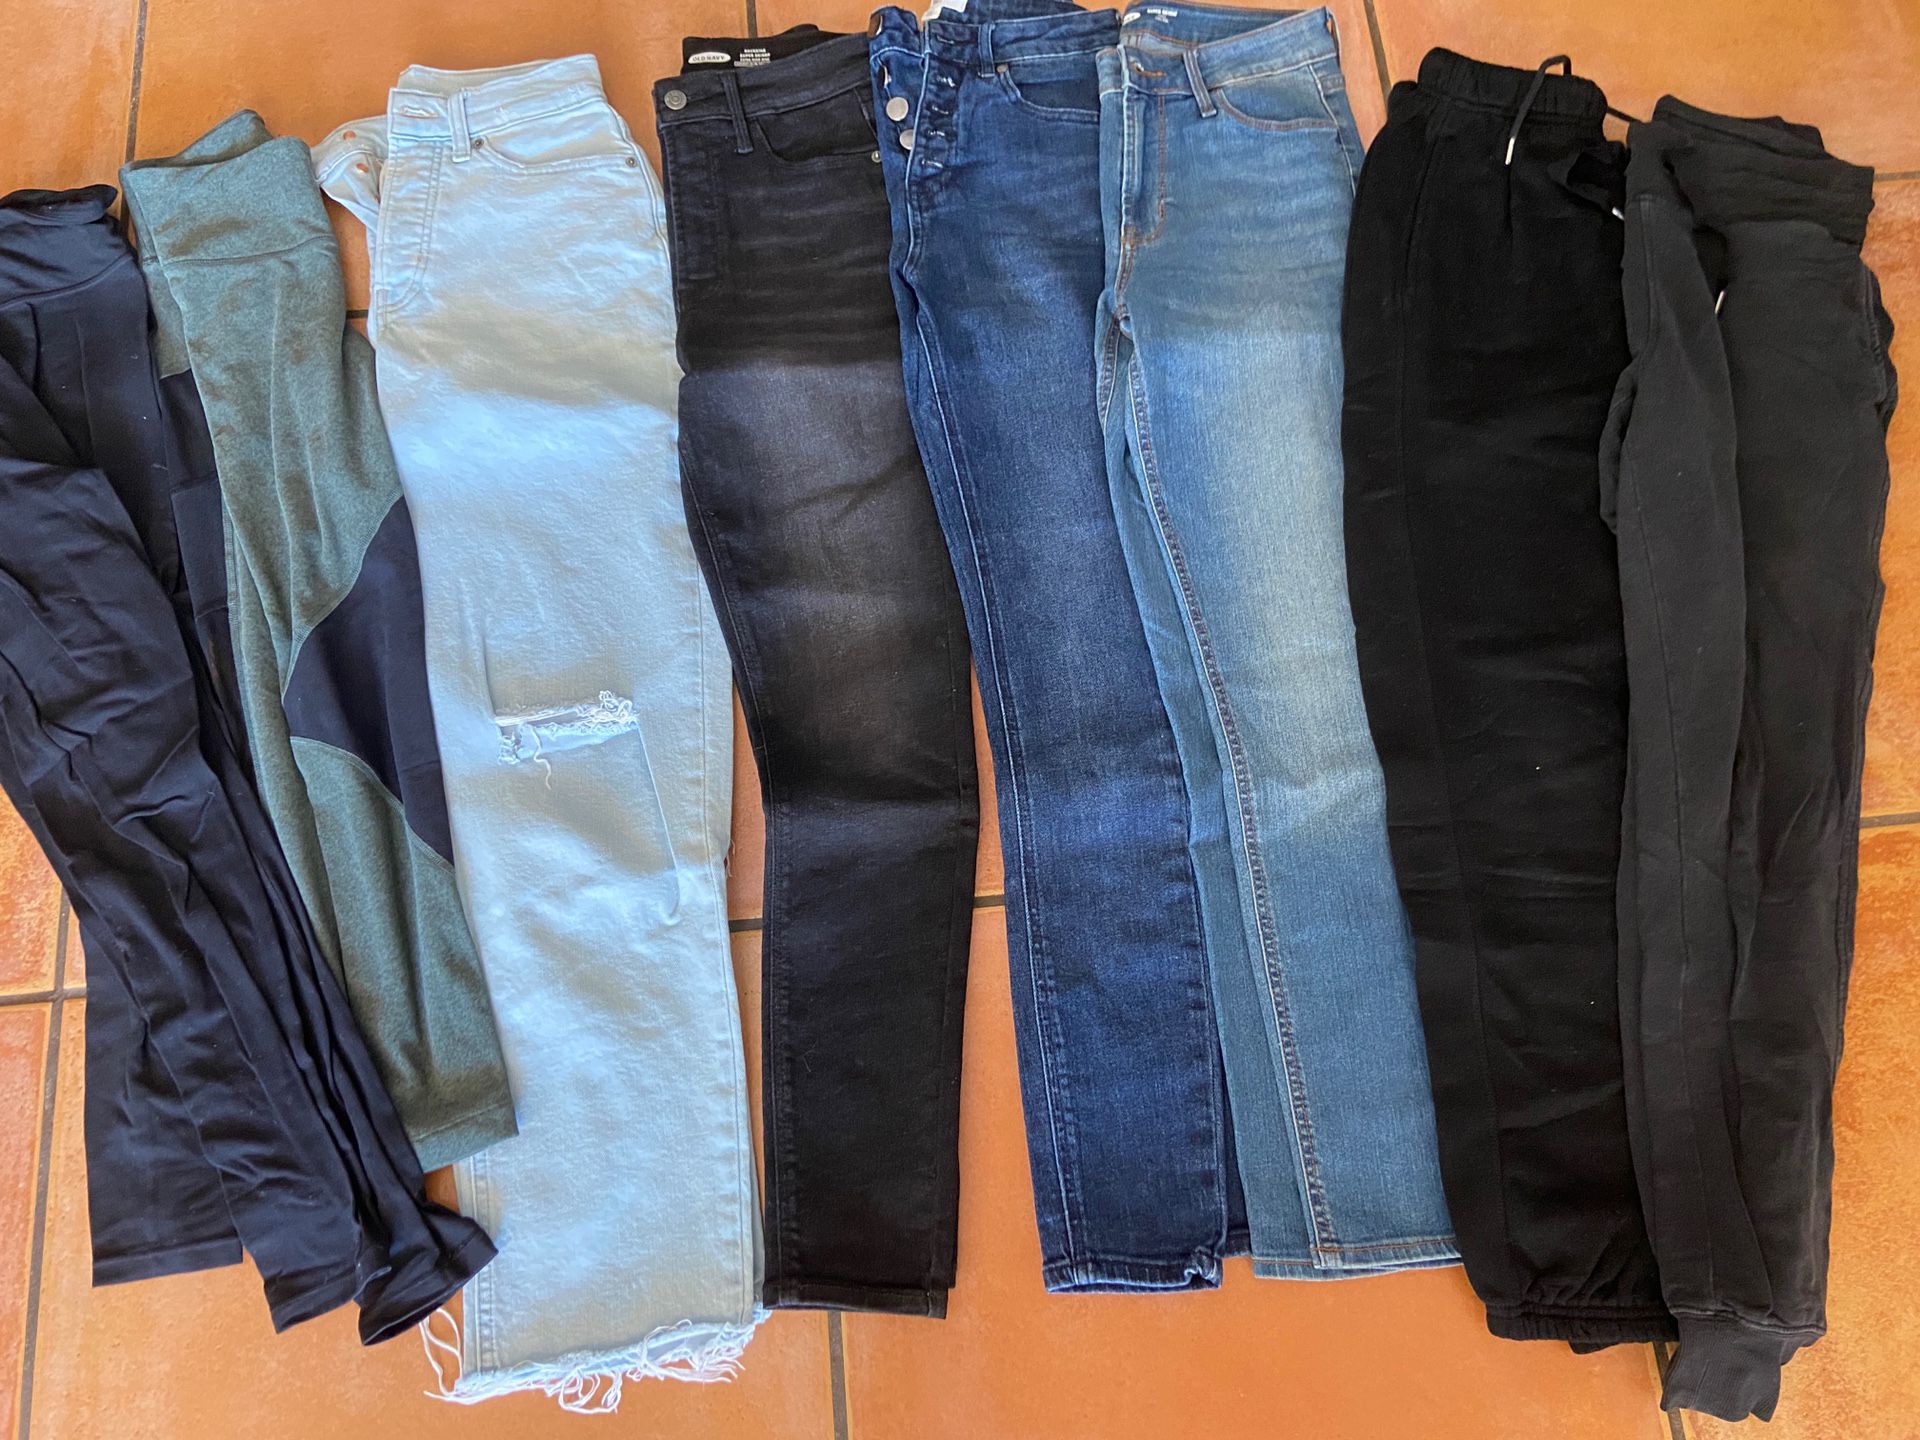 Jeans/leggings/joggers Size 0